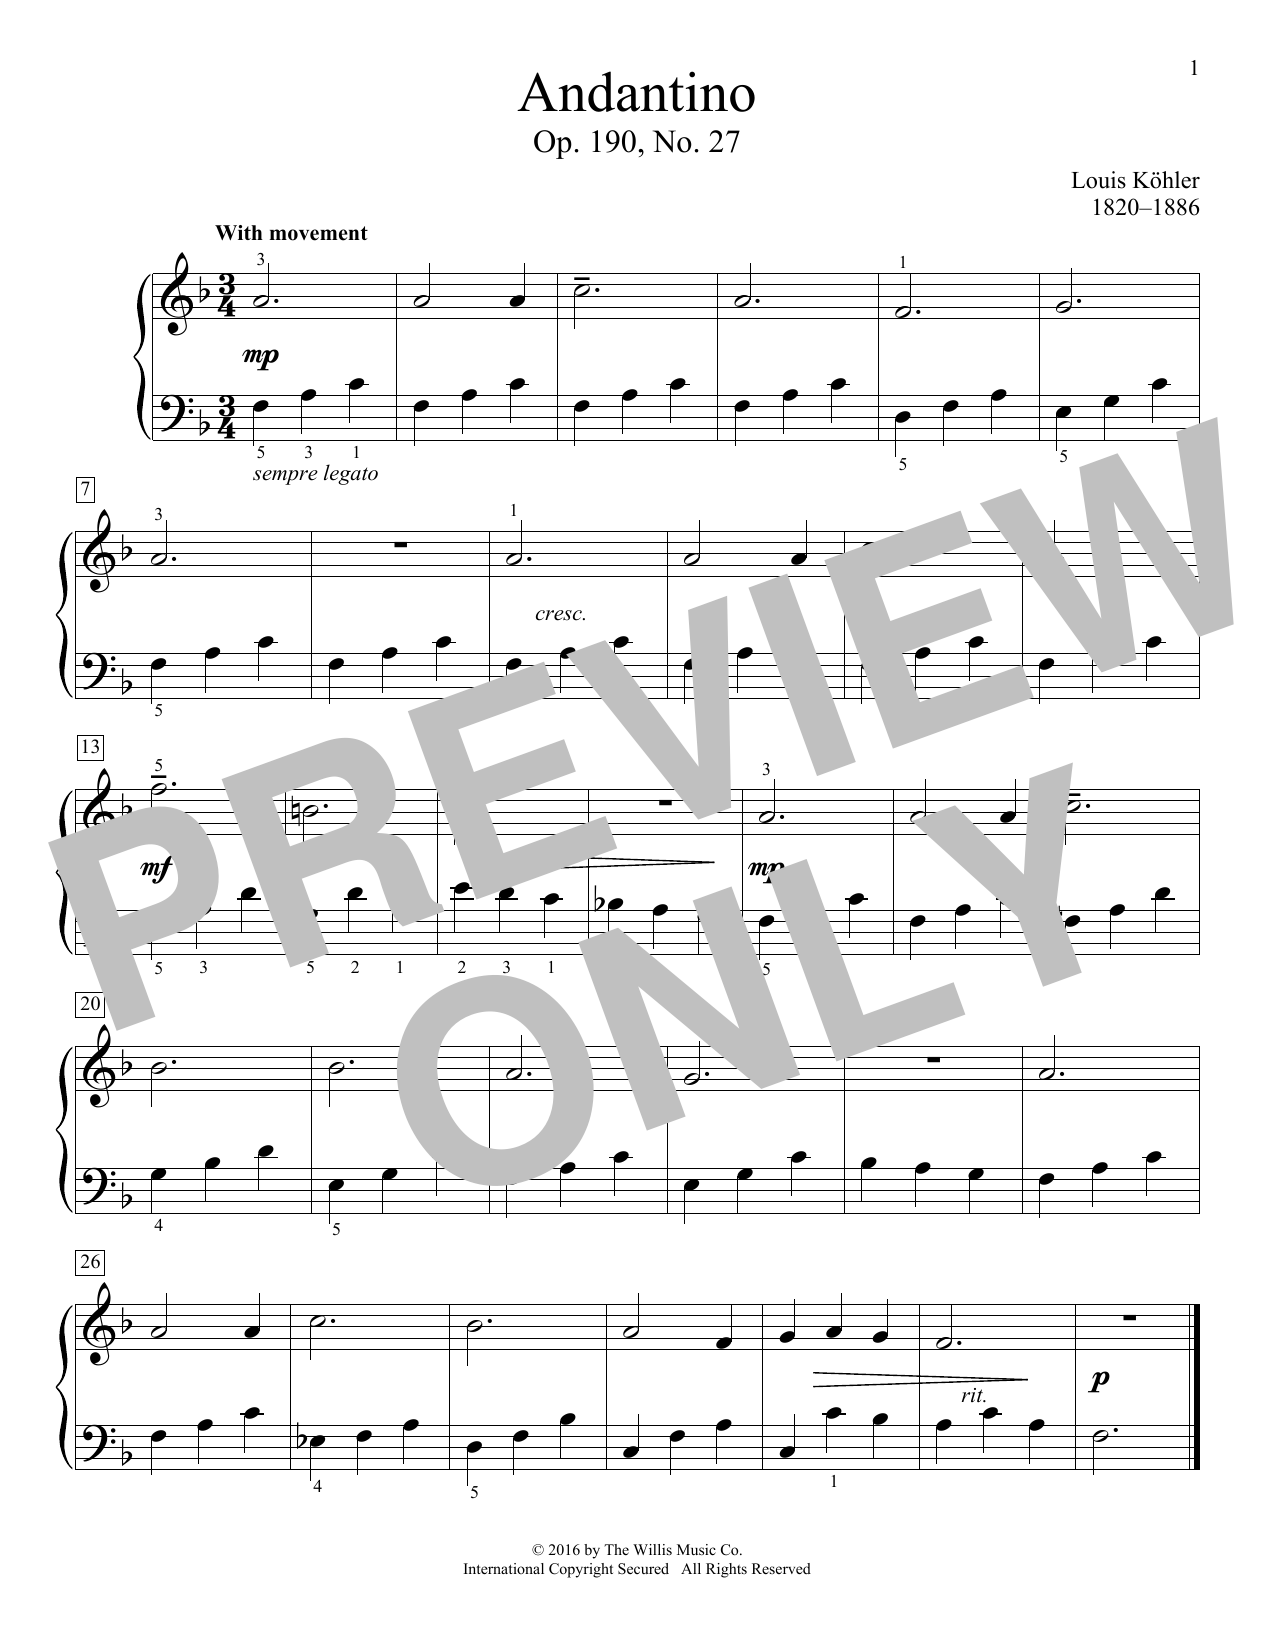 Louis Kohler Andantino, Op. 190, No. 27 Sheet Music Notes & Chords for Educational Piano - Download or Print PDF